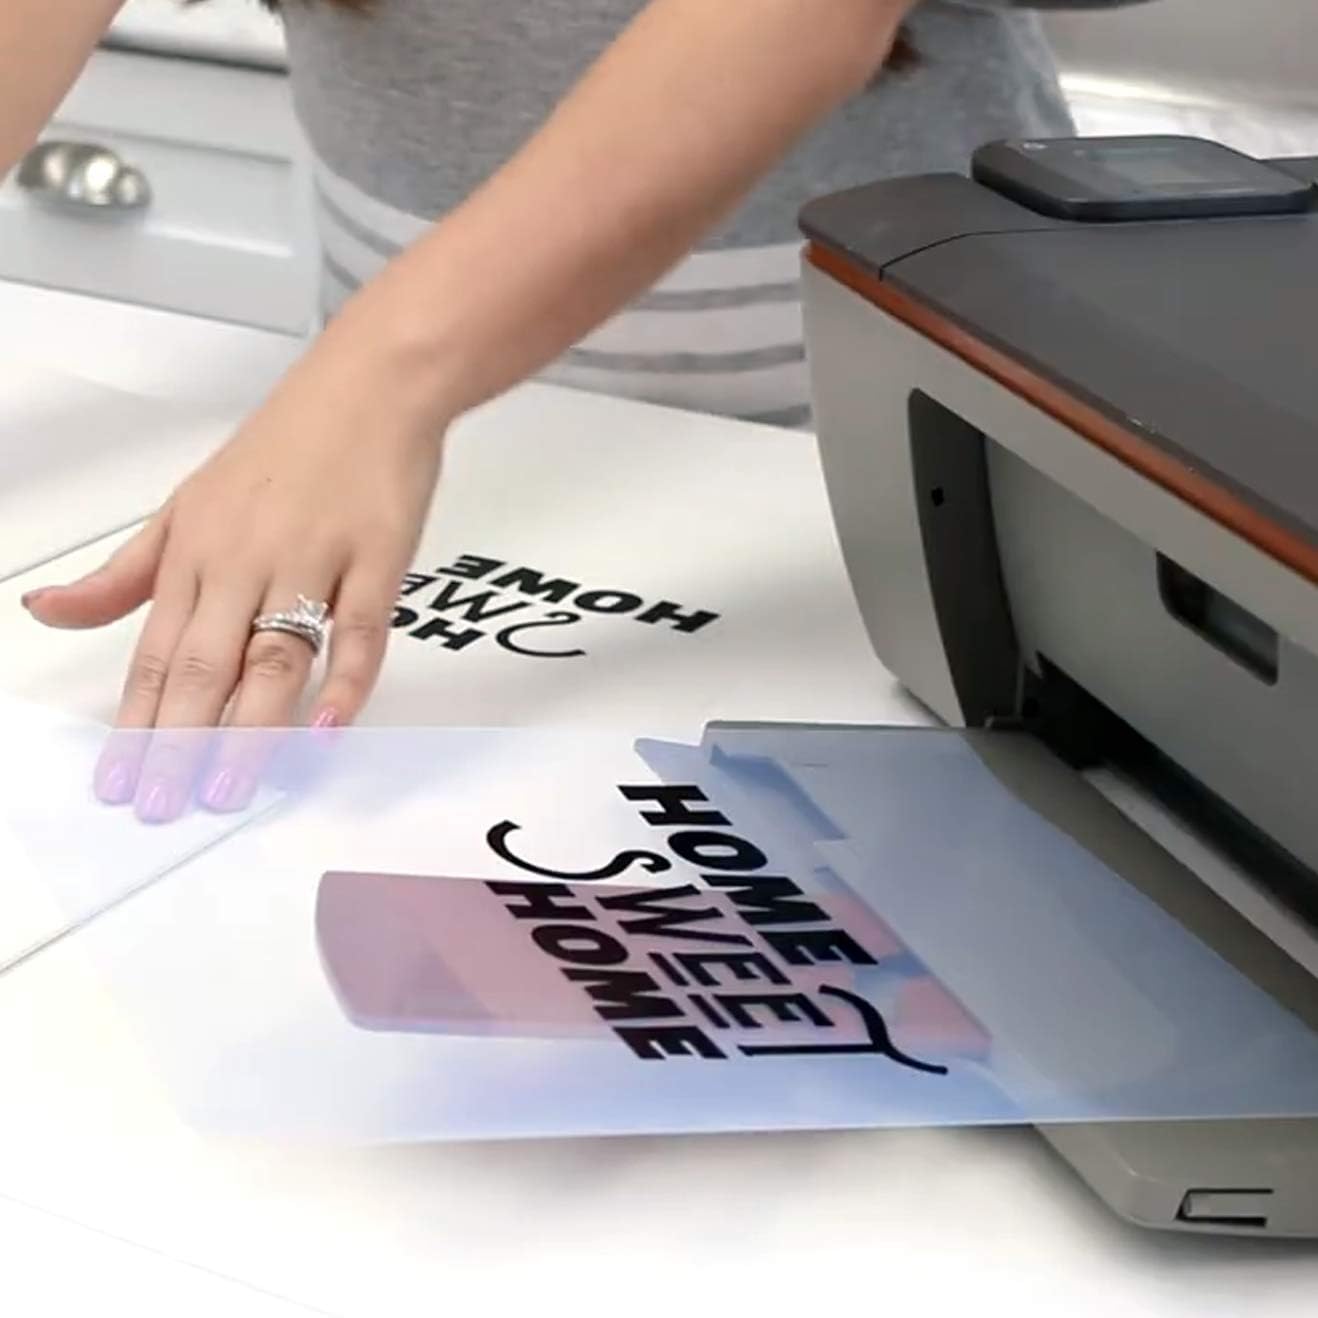 Ikonart Inkjet Printer Film for Screen Printing, 8.5